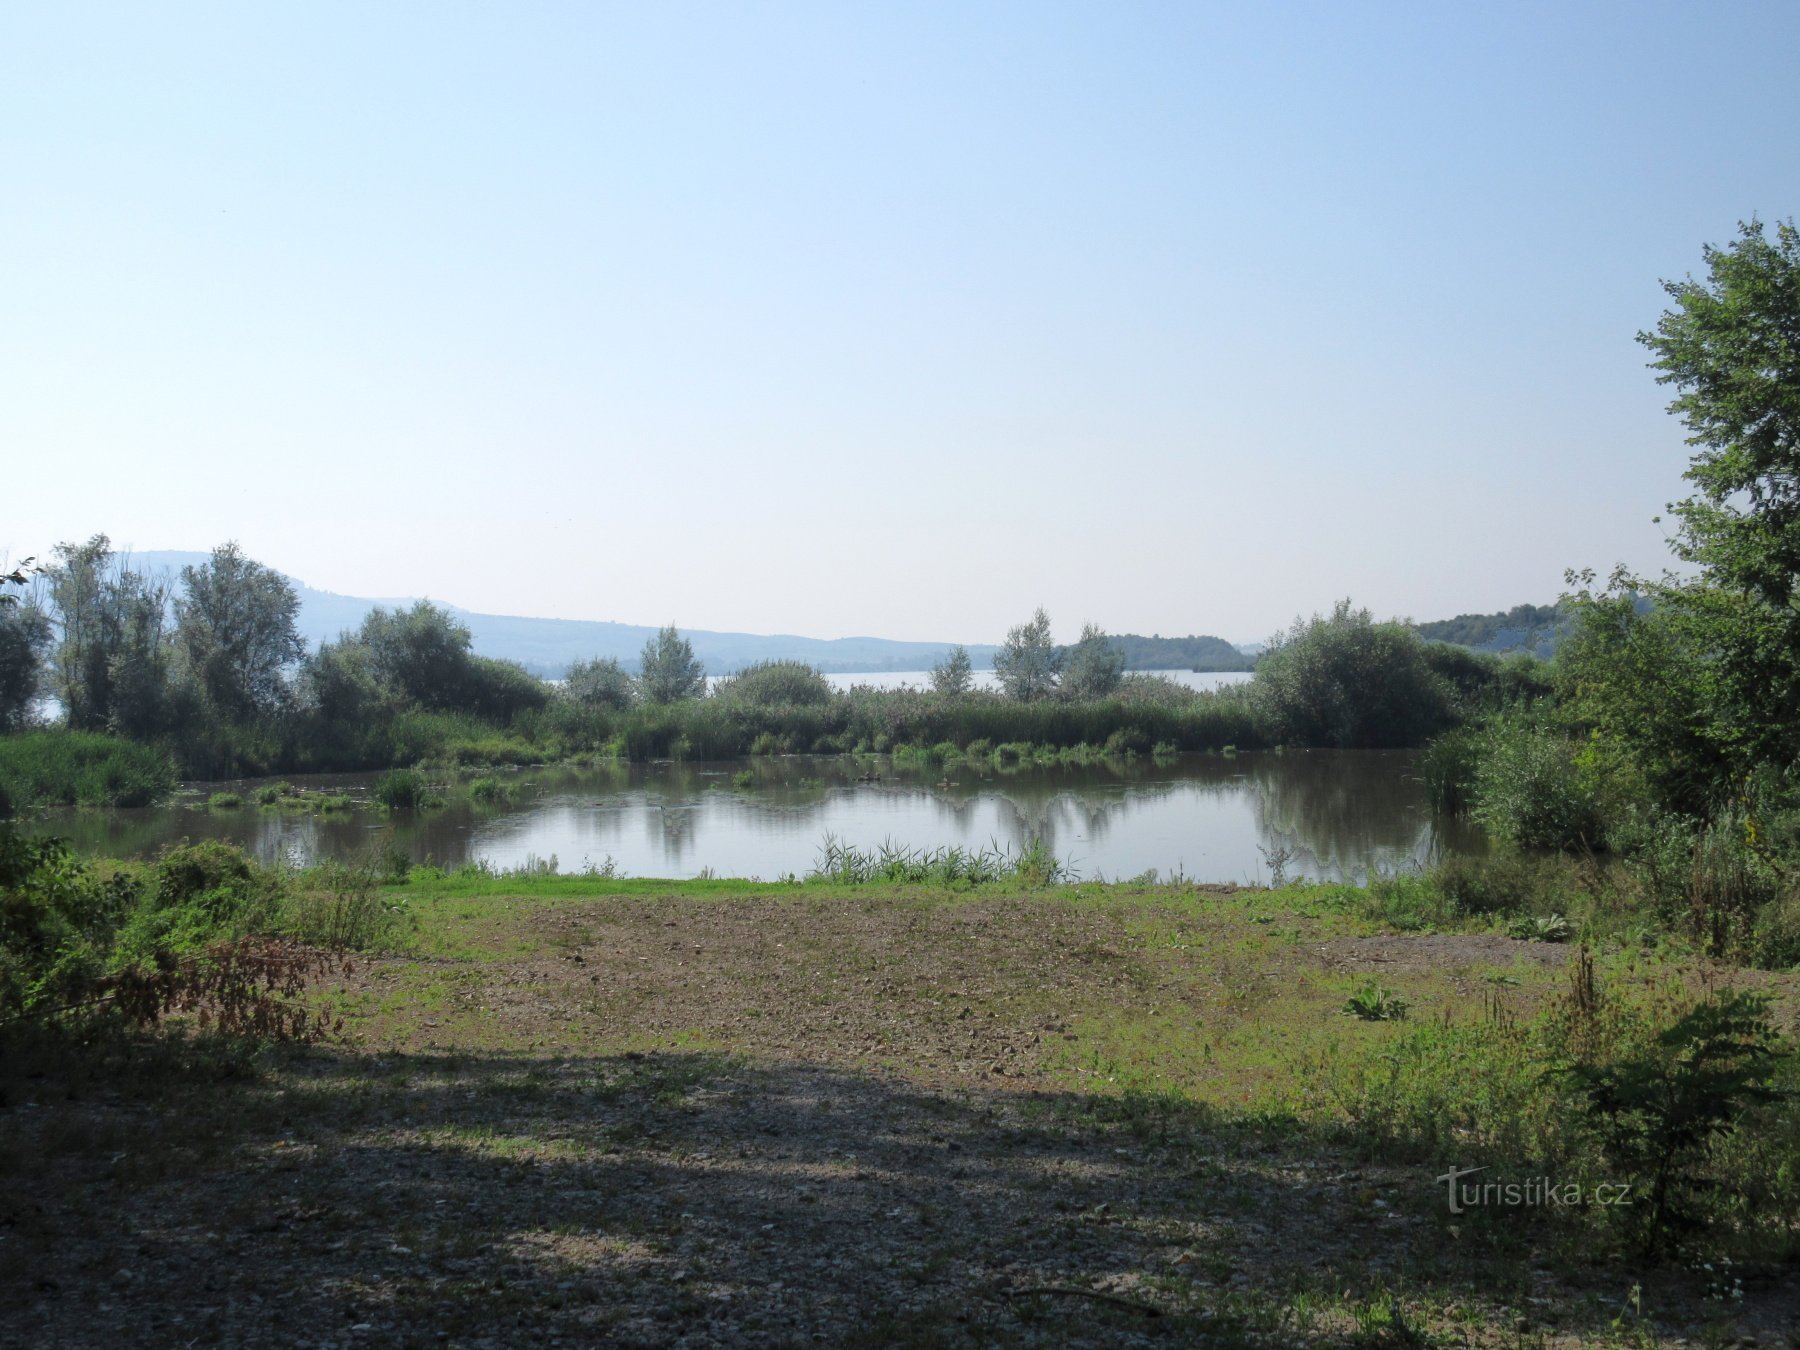 Upper reservoir with lagoon